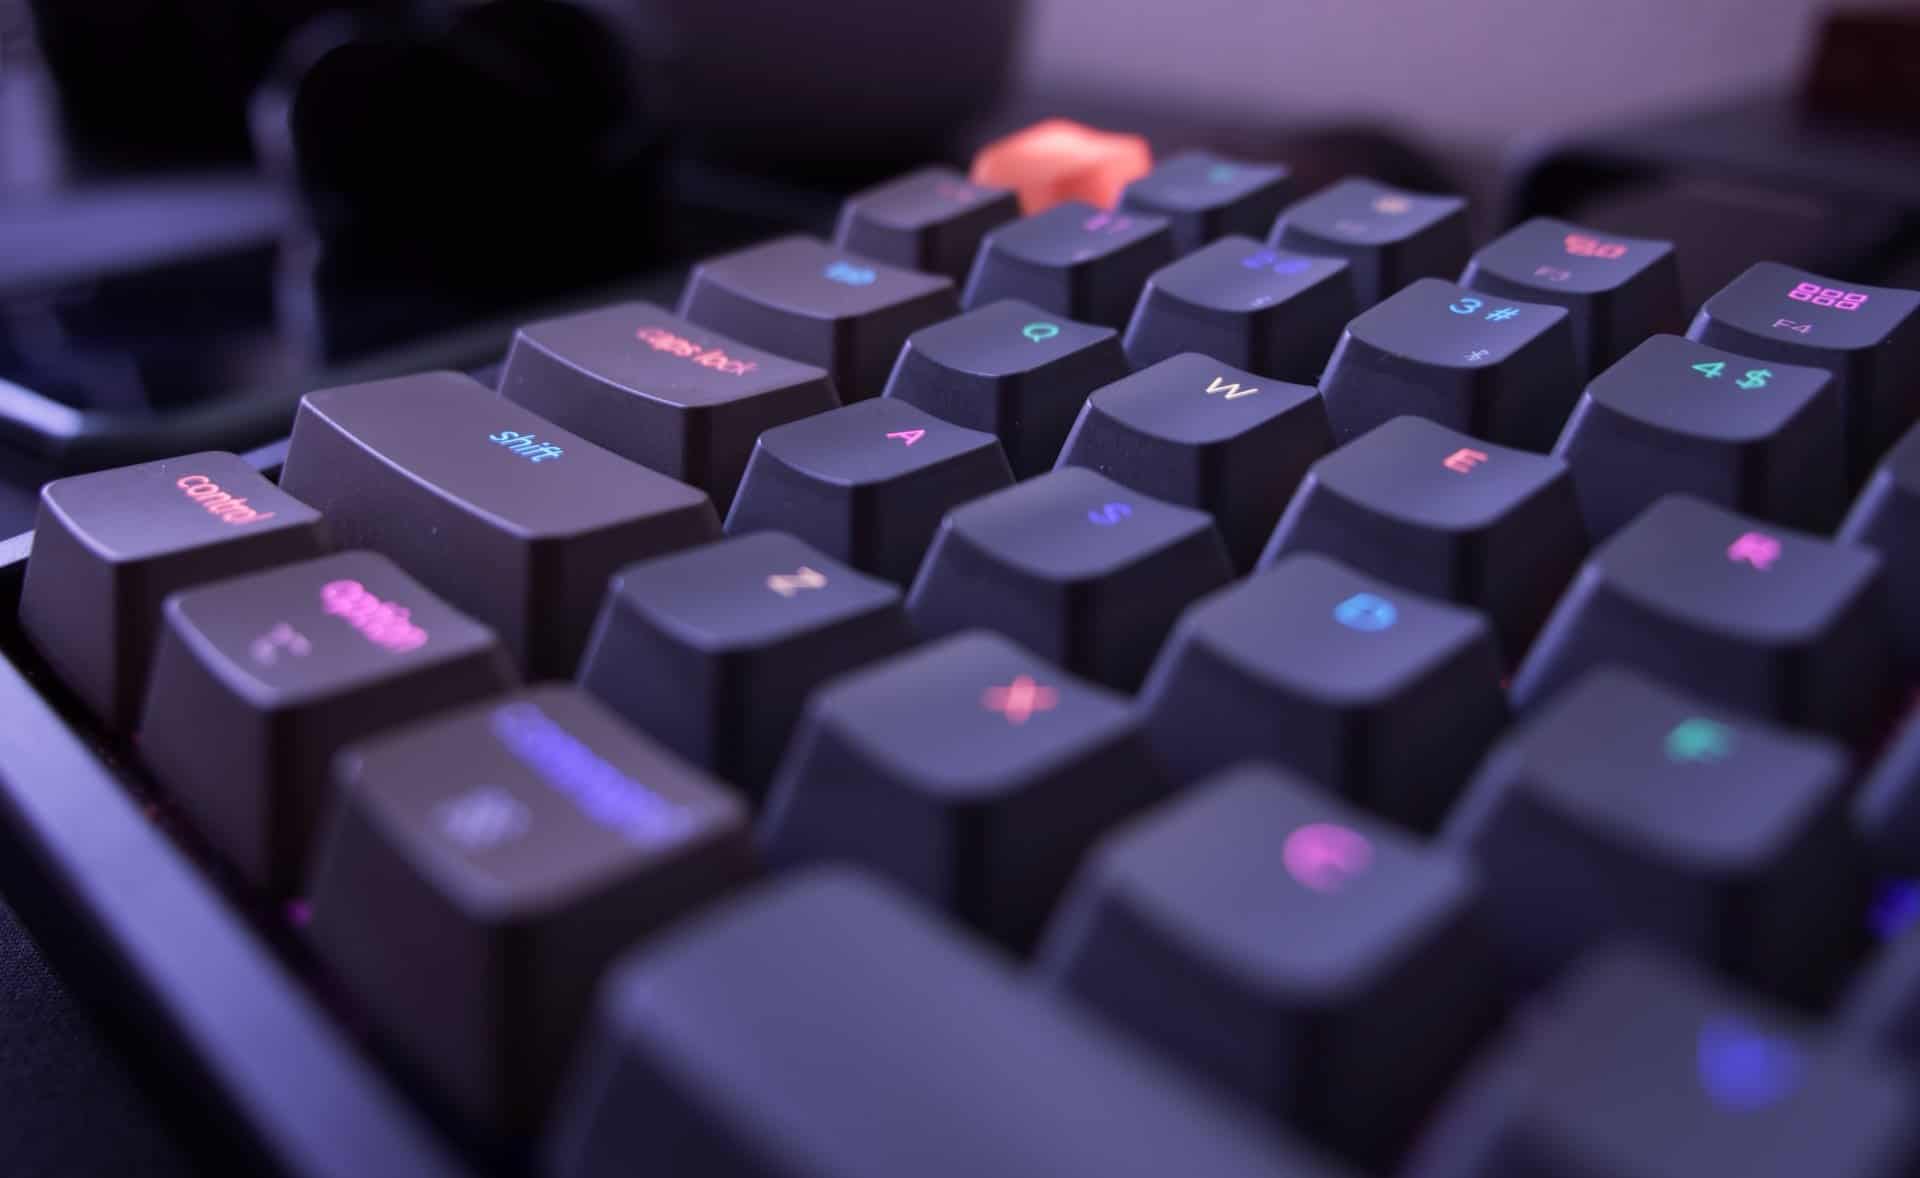 colorful keyboard keys